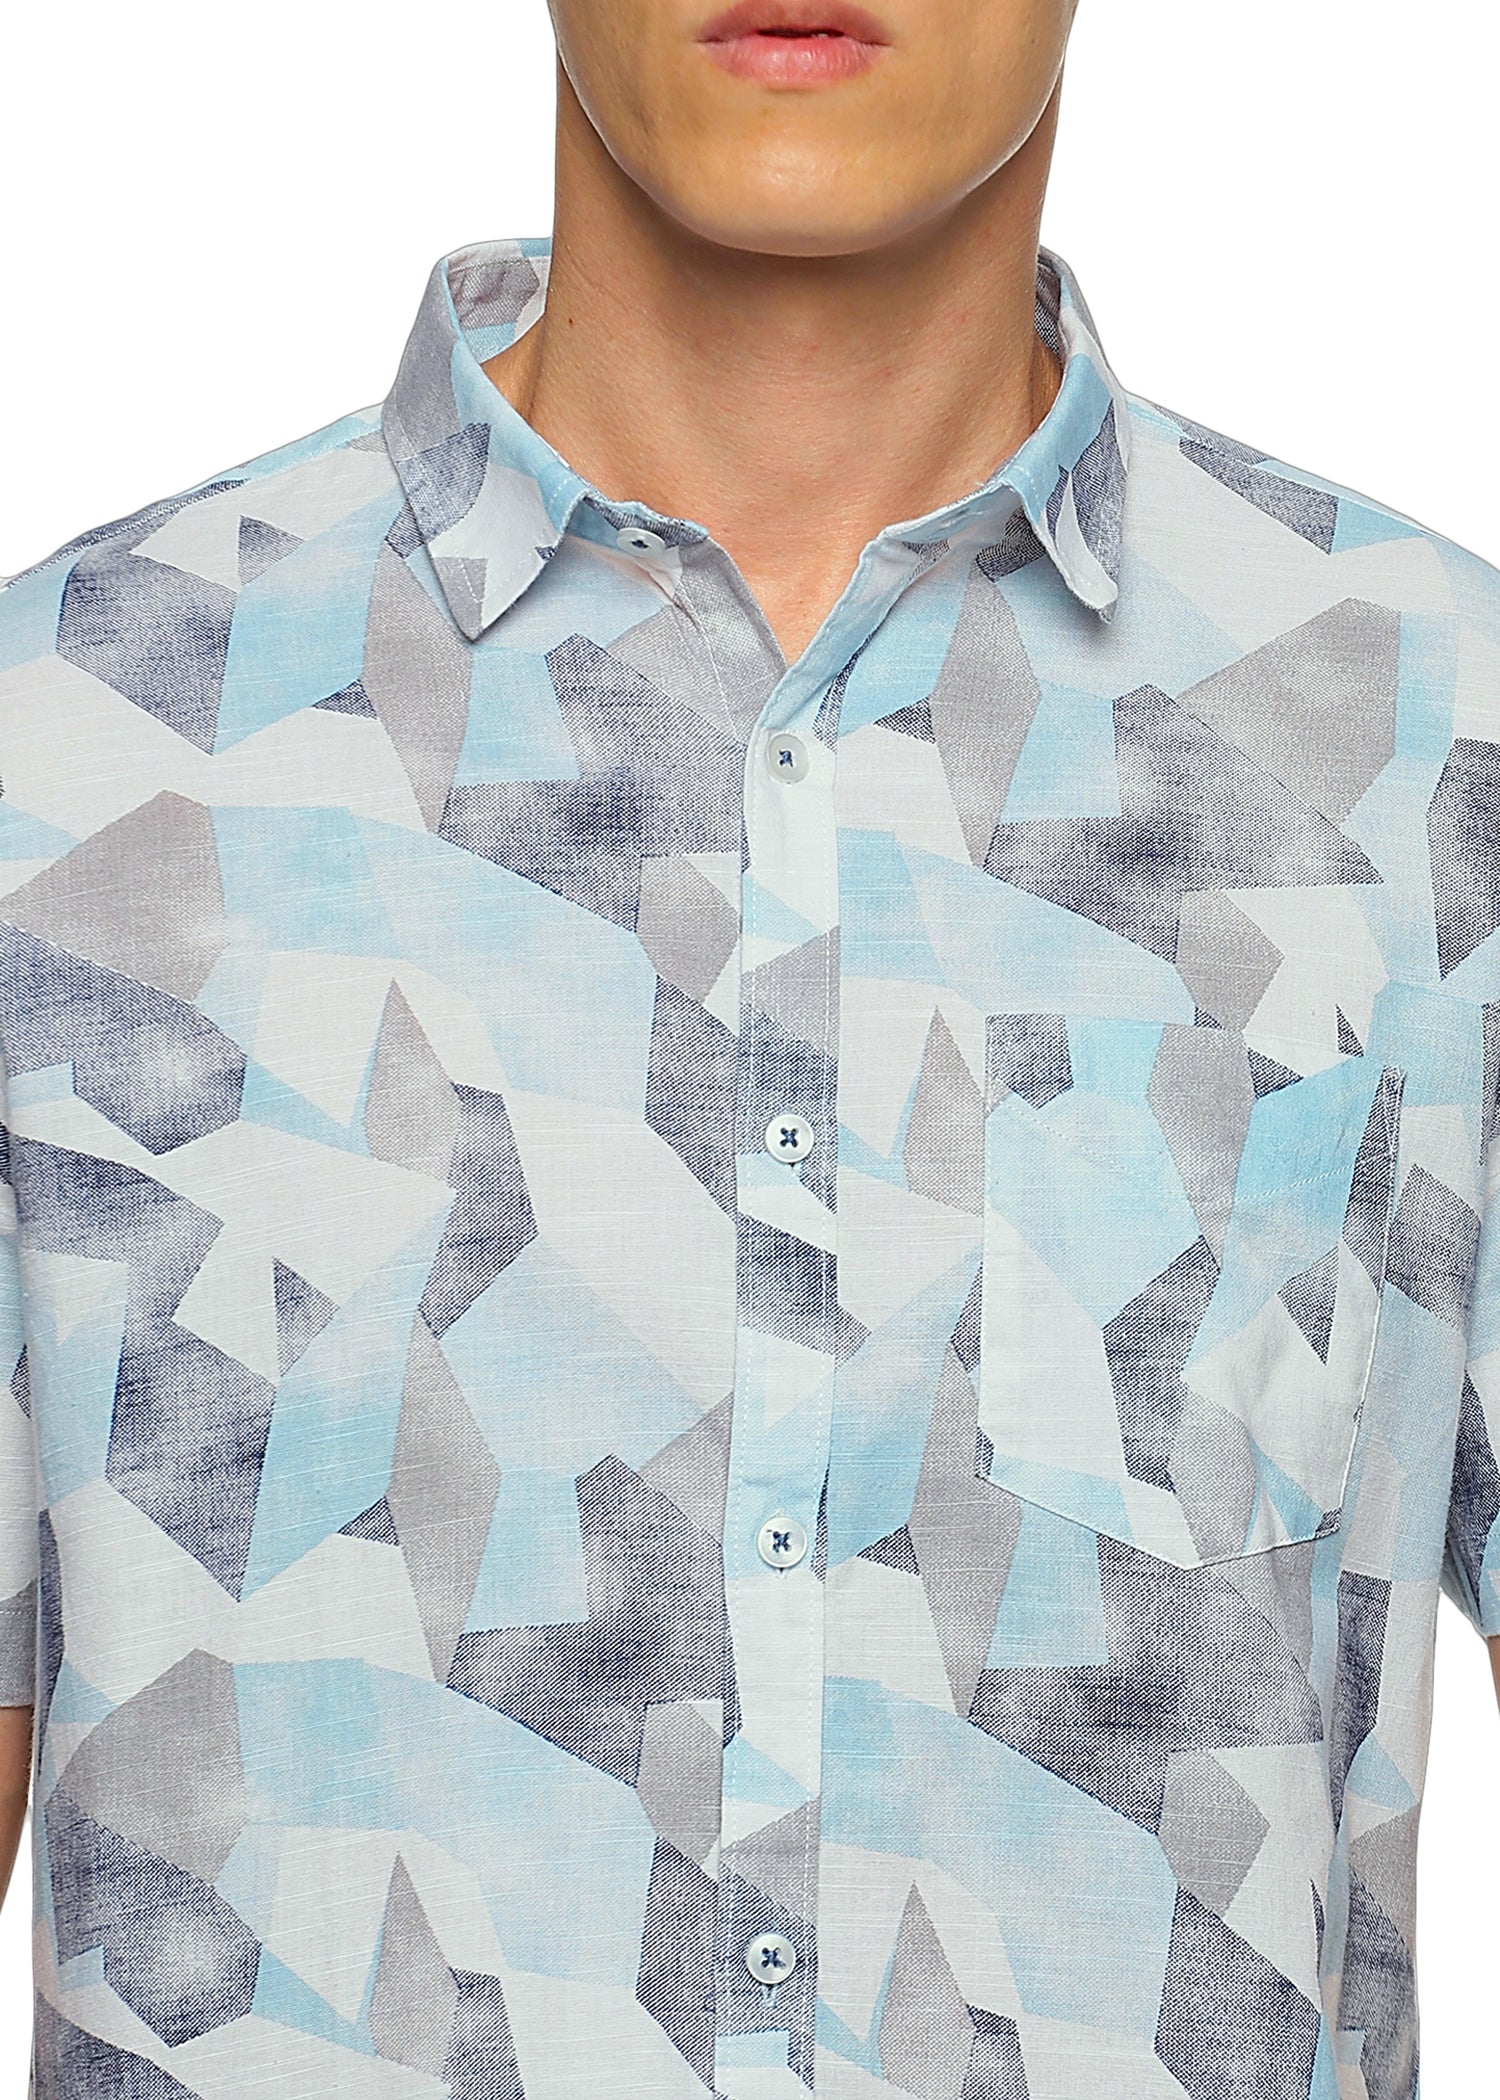 Blue Maze Printed Shirt - Tusok